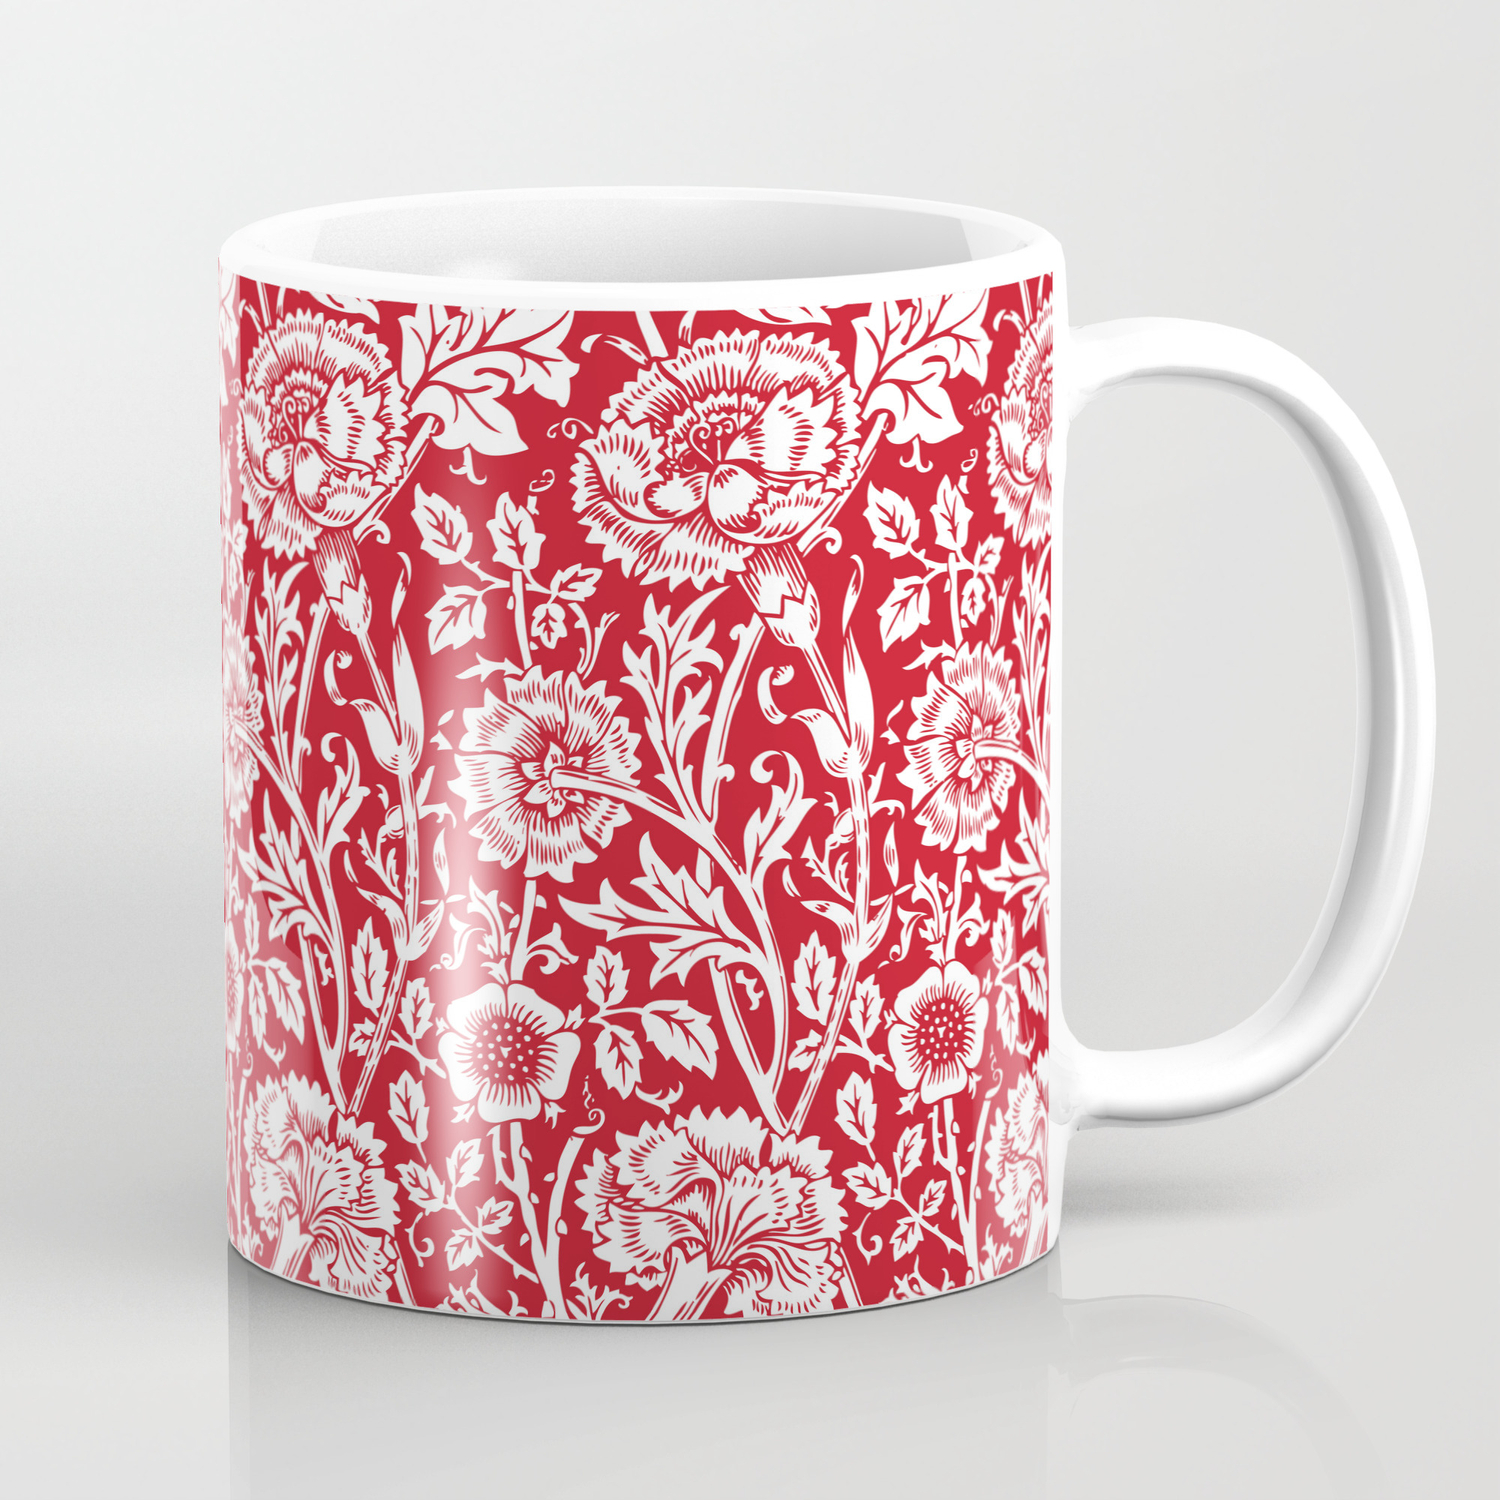 set of 6 china aspen mugs in red tapestry William Morris design 